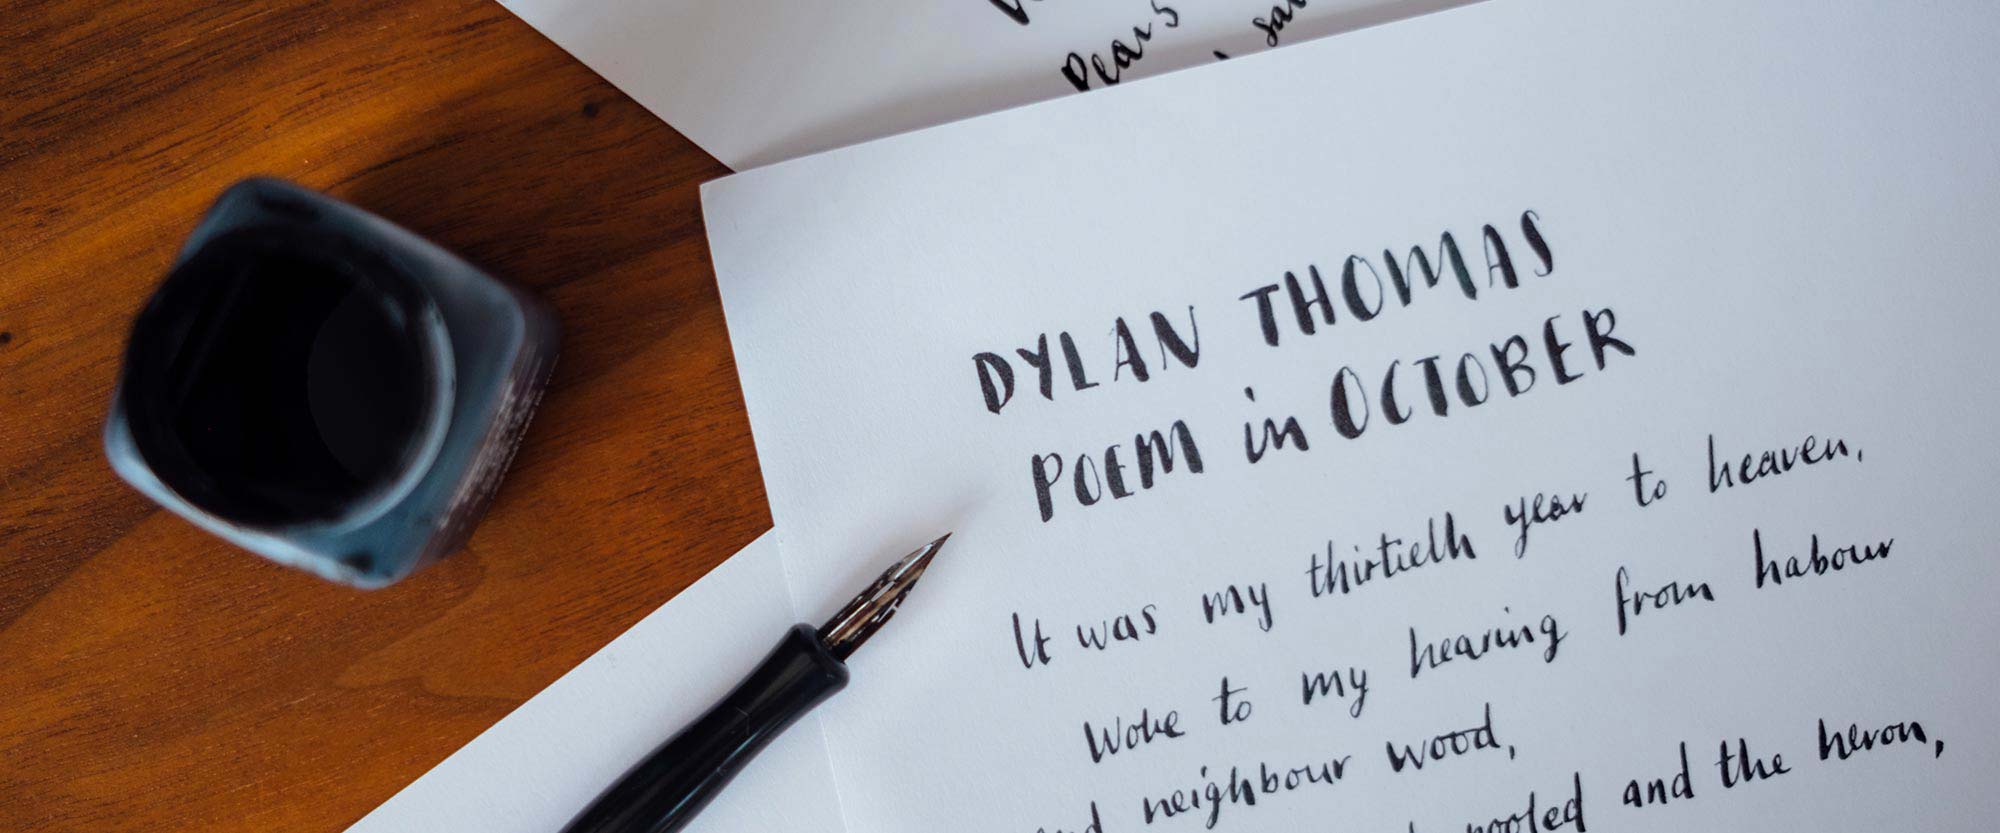 Dylan Thomas Calligraphy Typography Poem 